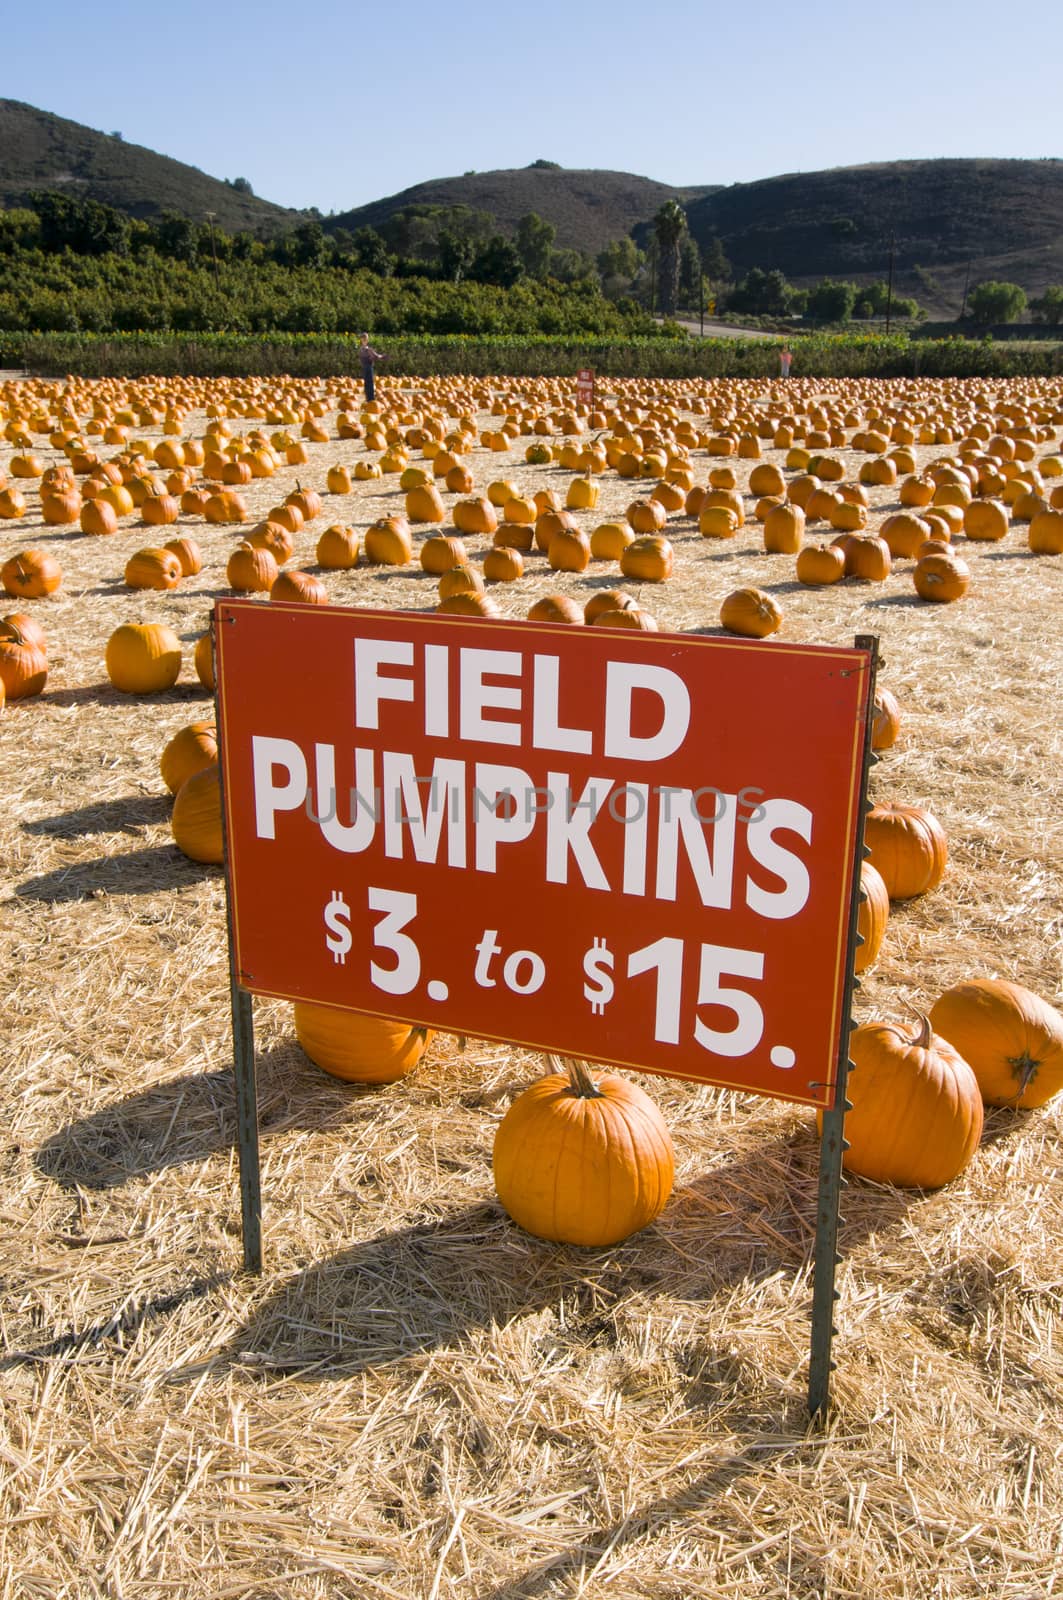 Field pumpkins for sale at farm harvest festival